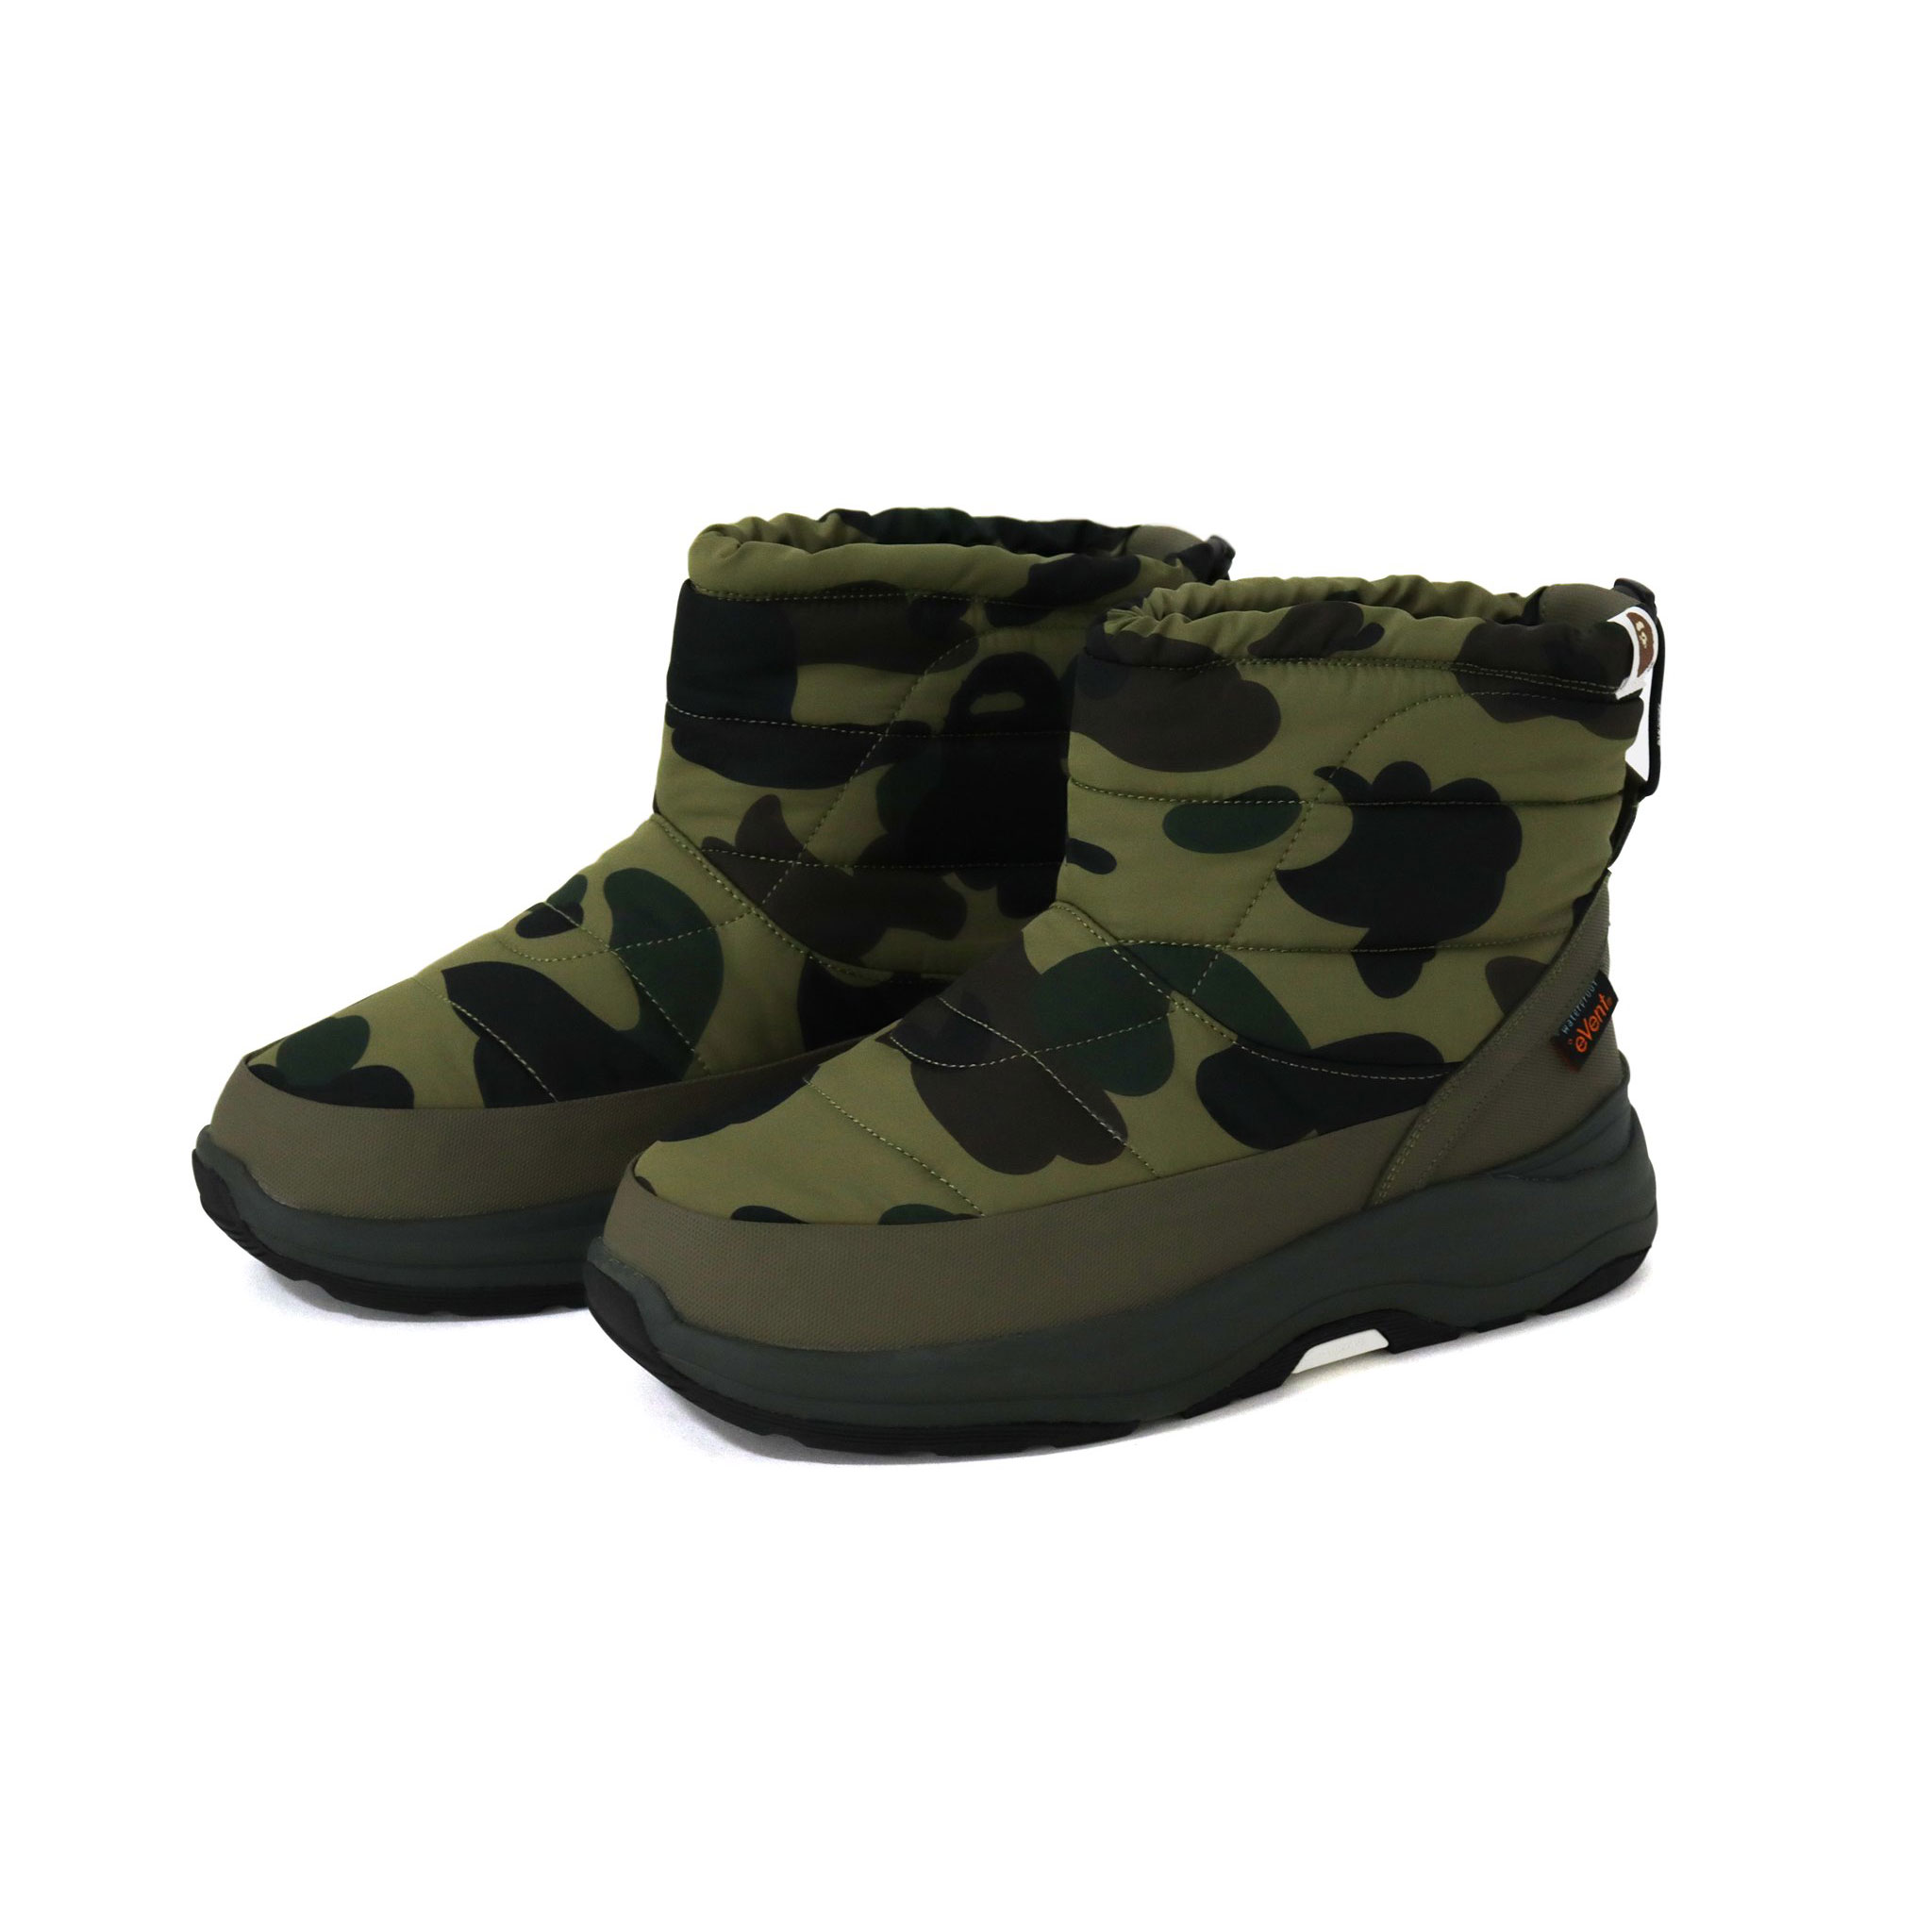 BAPE x SUICOKE Bower Boots Release Date | Nice Kicks